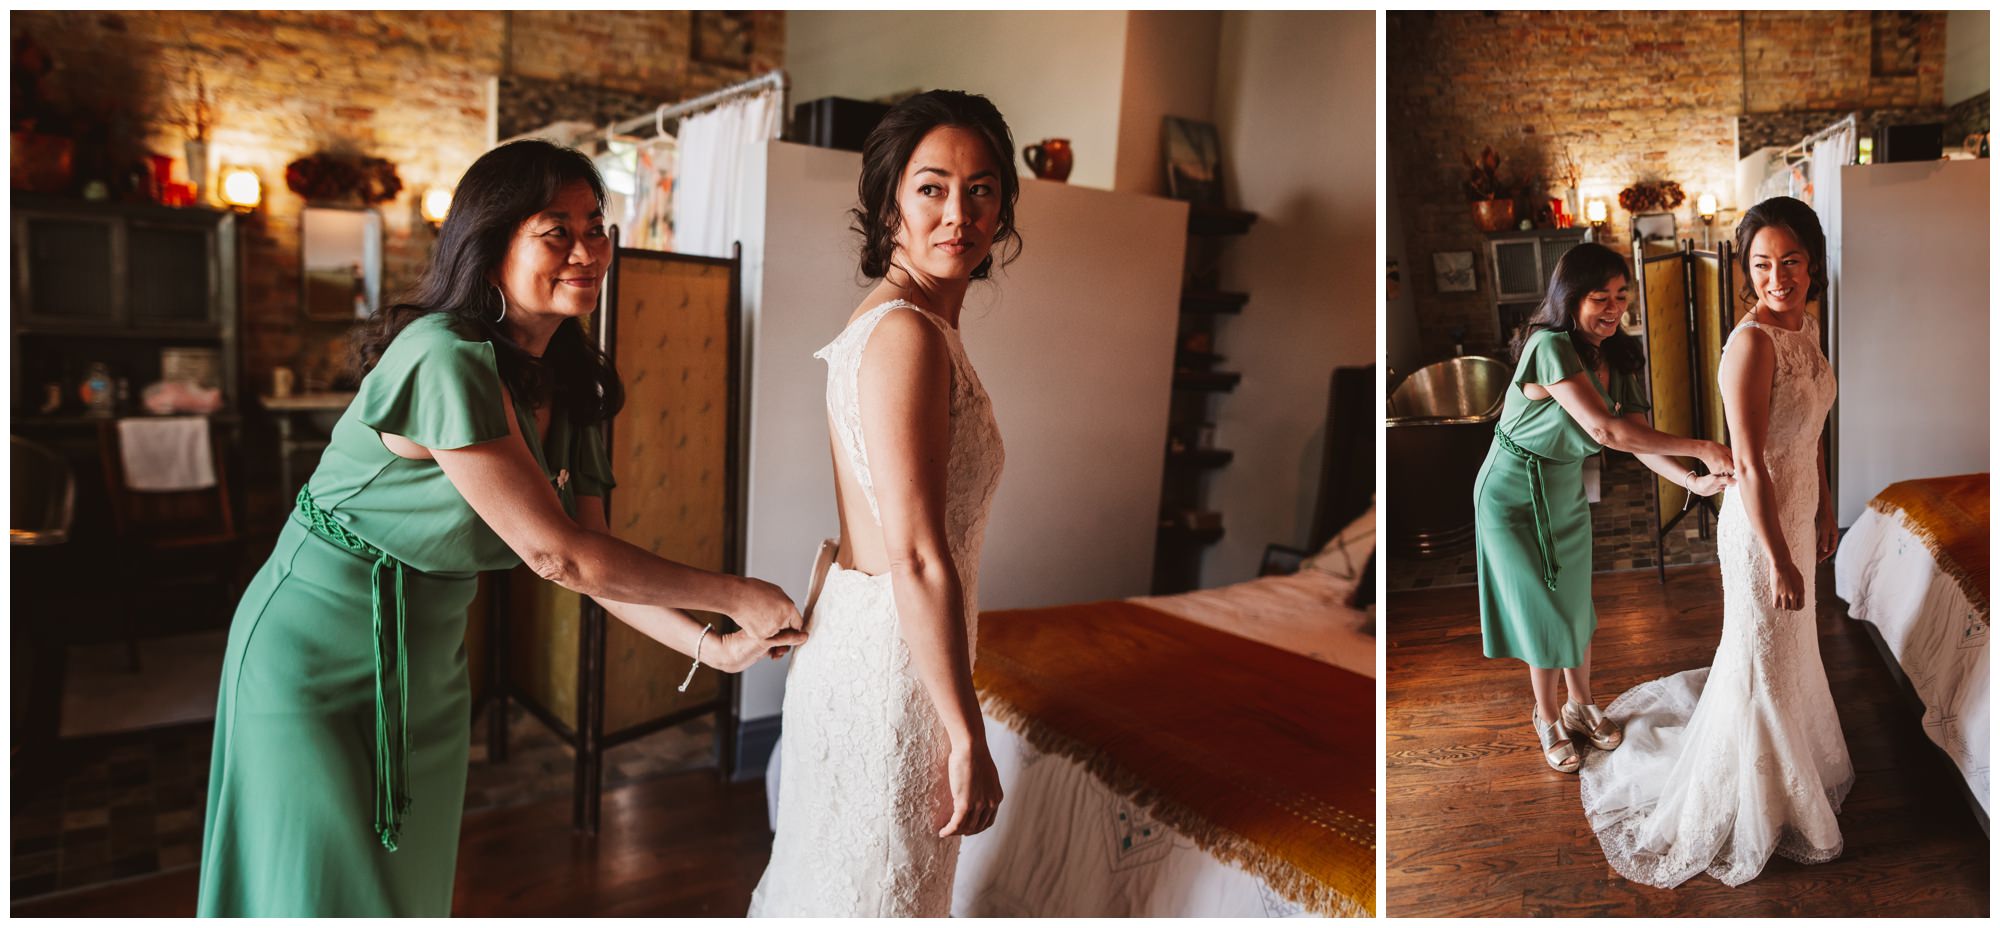 The Adamkovi, Chicago wedding photographers